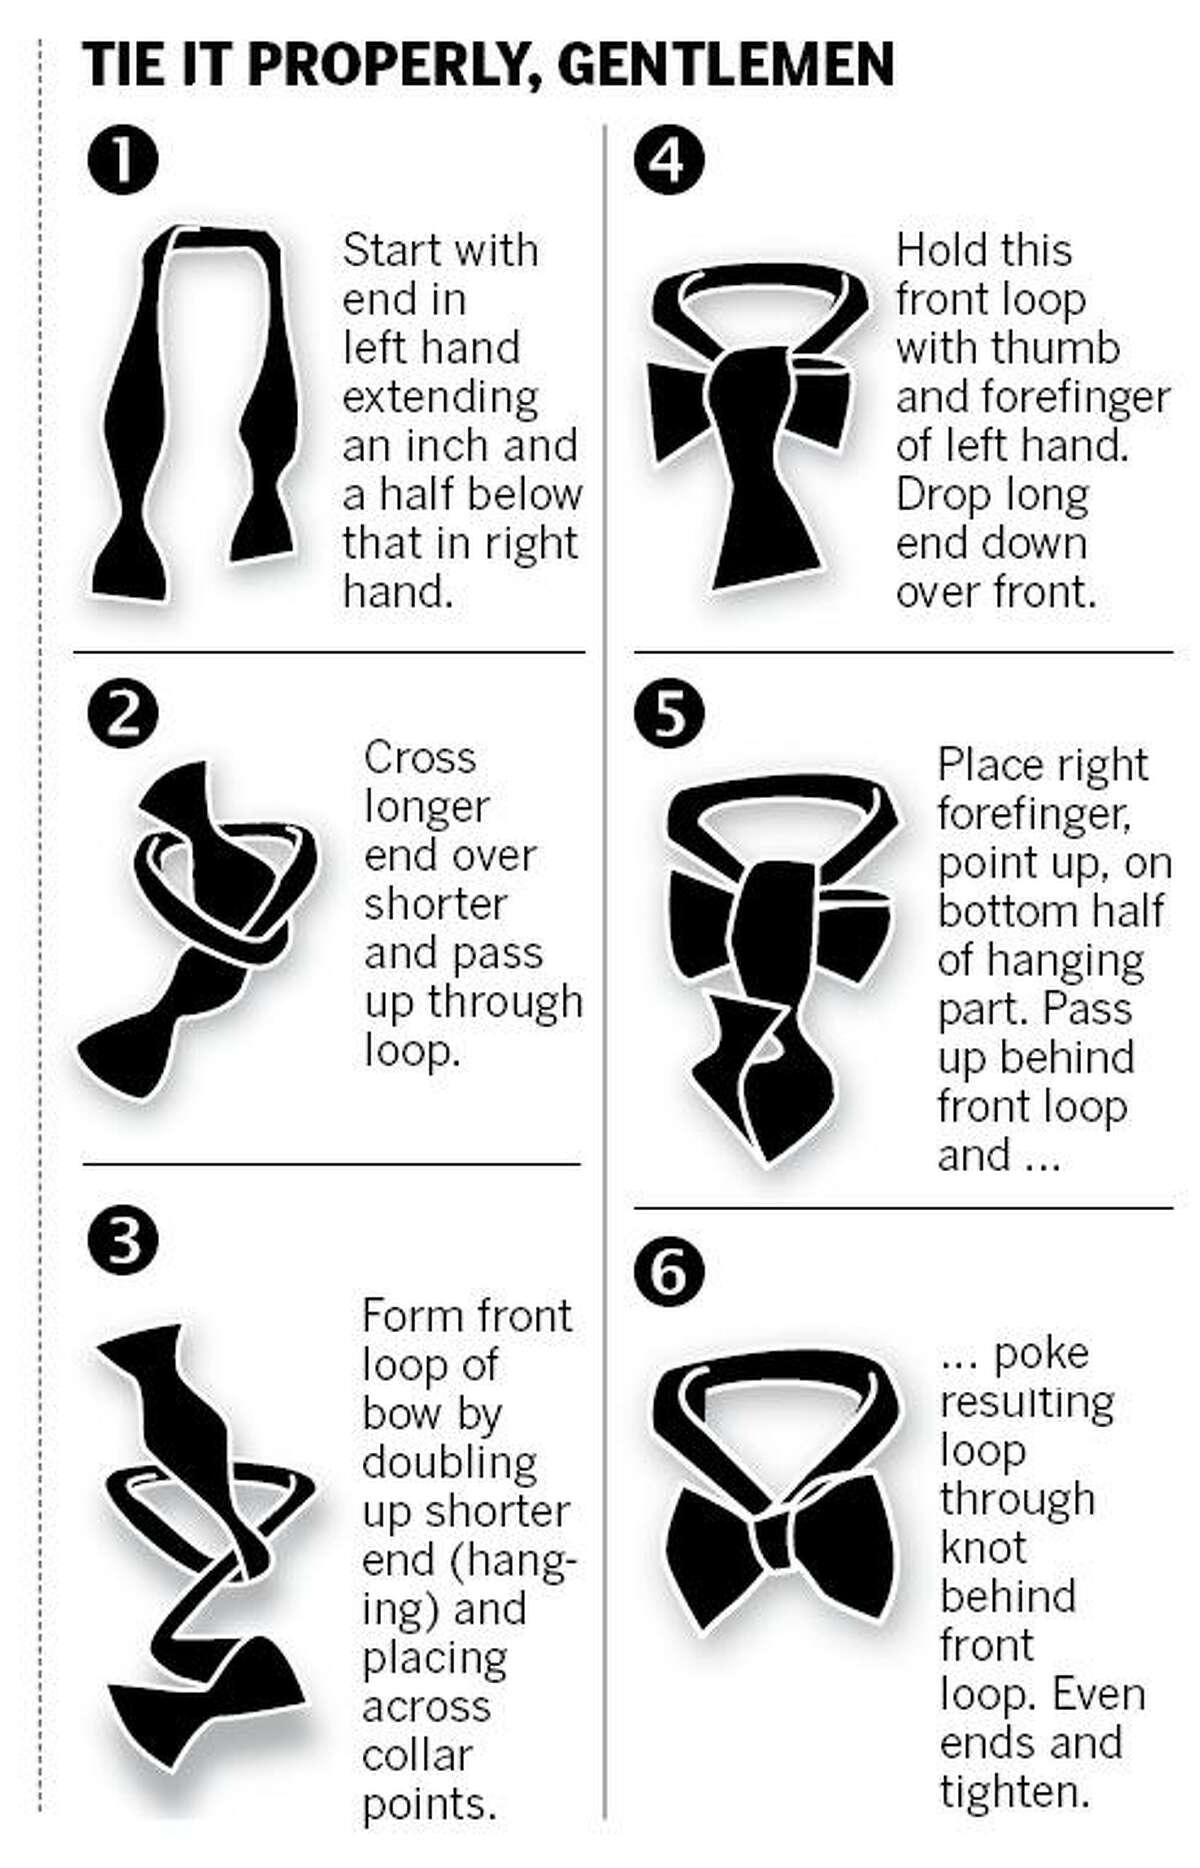 Tips for wearing, buying a tuxedo